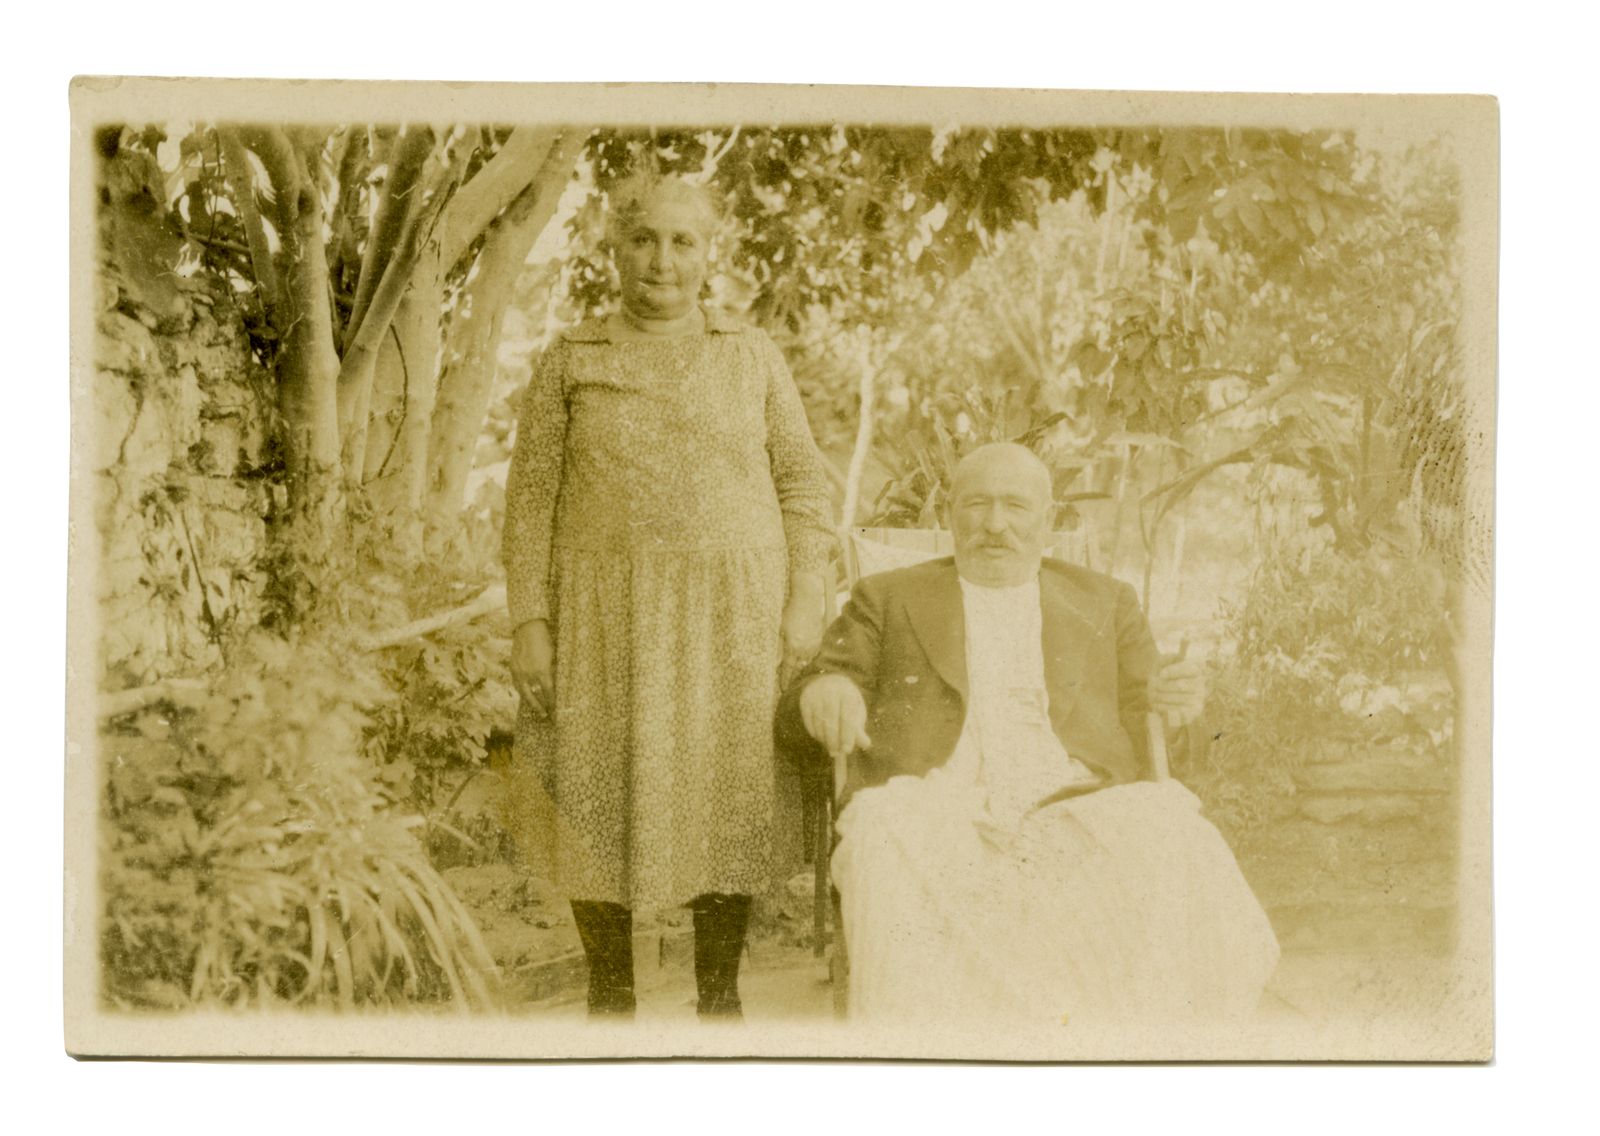 © Rebecca Topakian - Dame Gulizar and Hadji Garabet Kevork Topakian, Istanbul or Kayseri, 1940s, family archives.